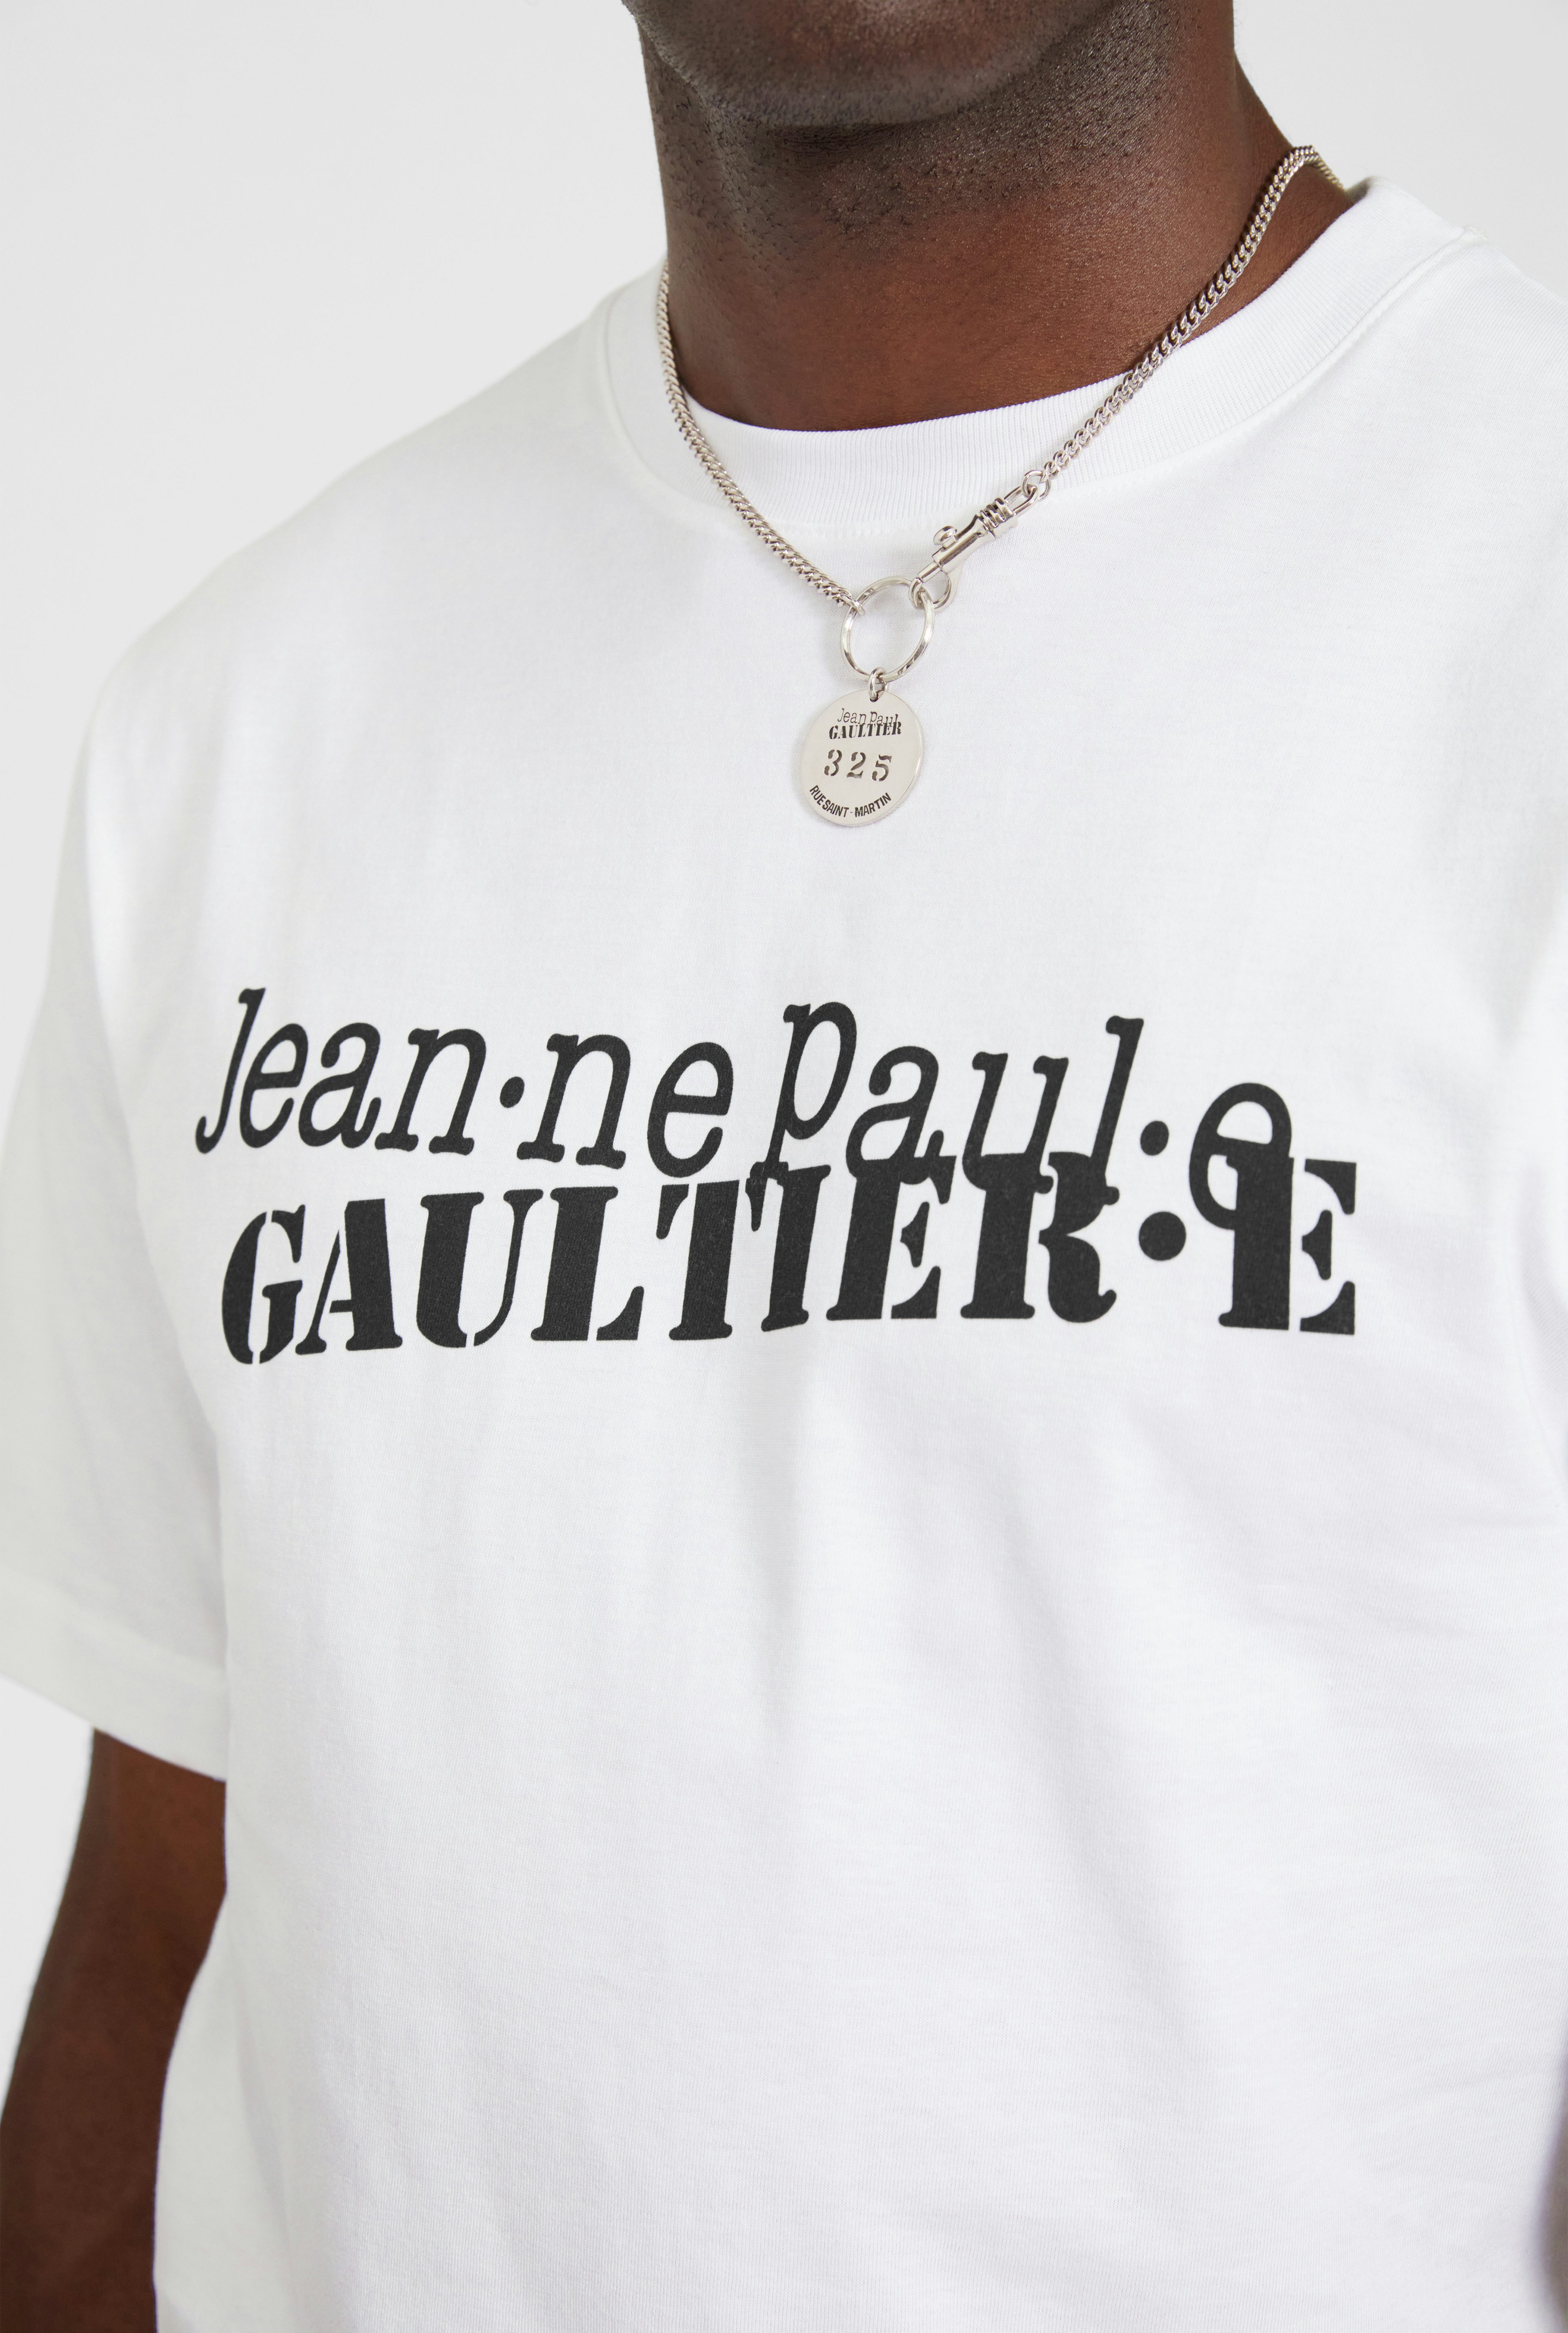 The Jean.ne Paul.e Gaultier.e T-shirt